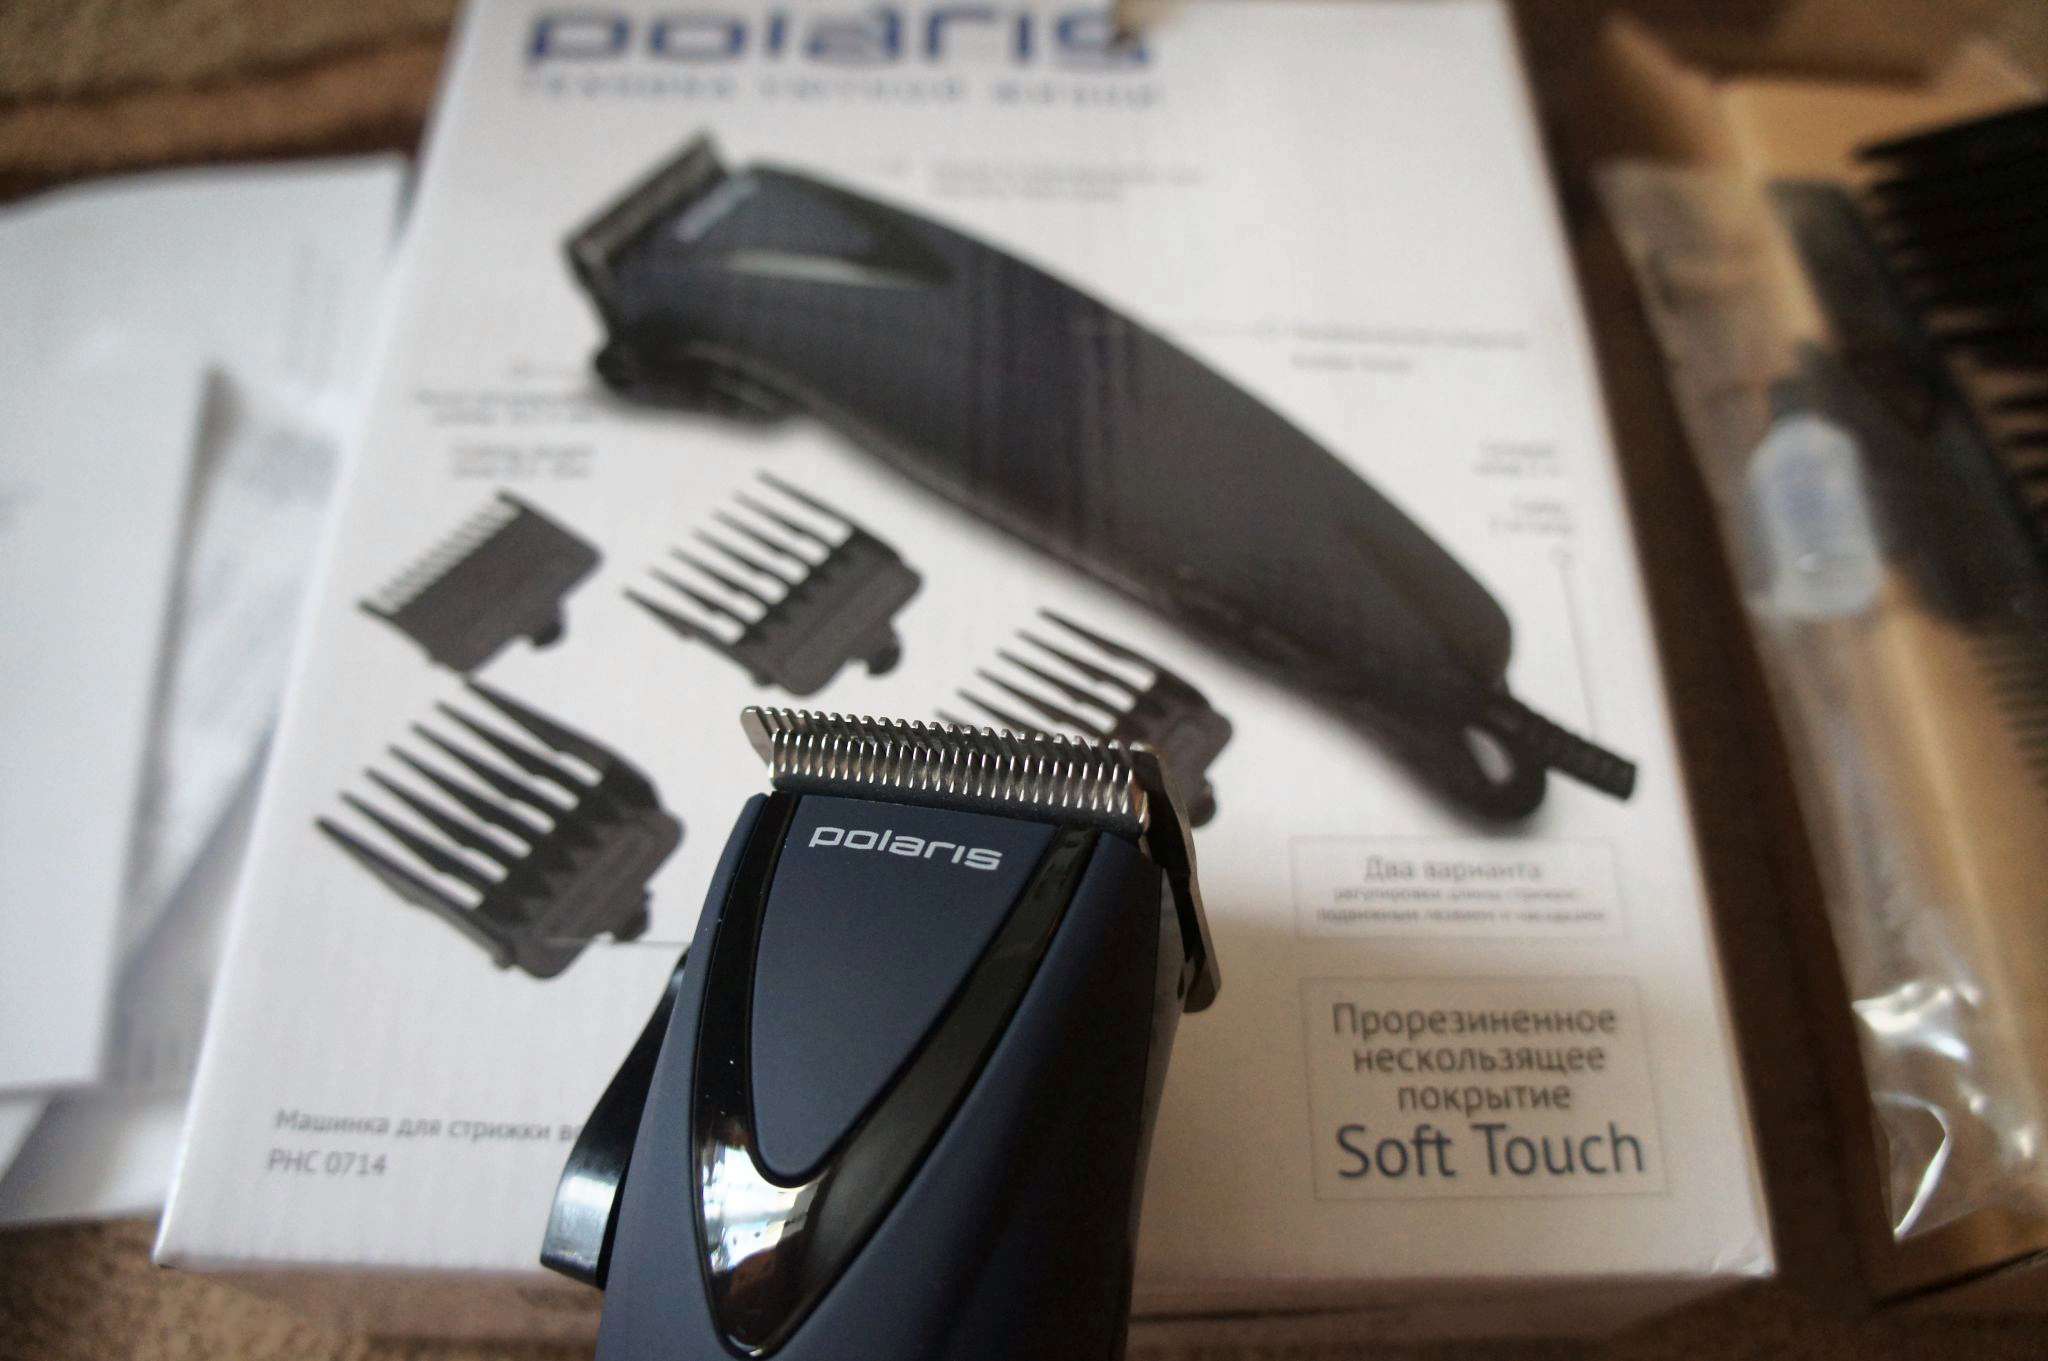 Как снять насадку с машинки для стрижки волос поларис phc 0201r